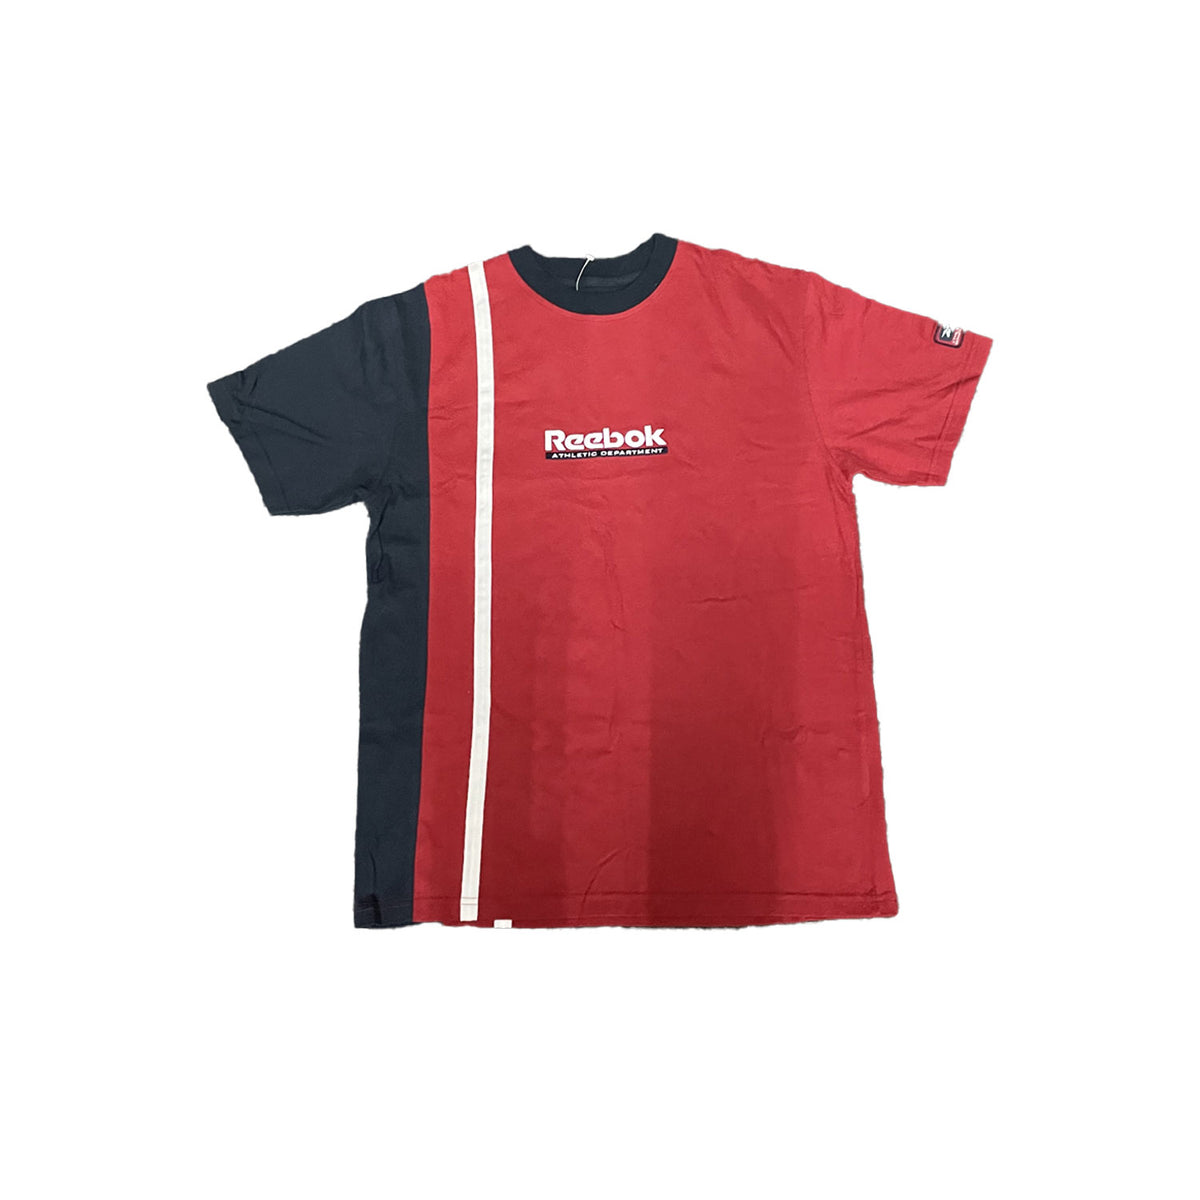 Reebok Original Women's Athletic Department T-Shirt